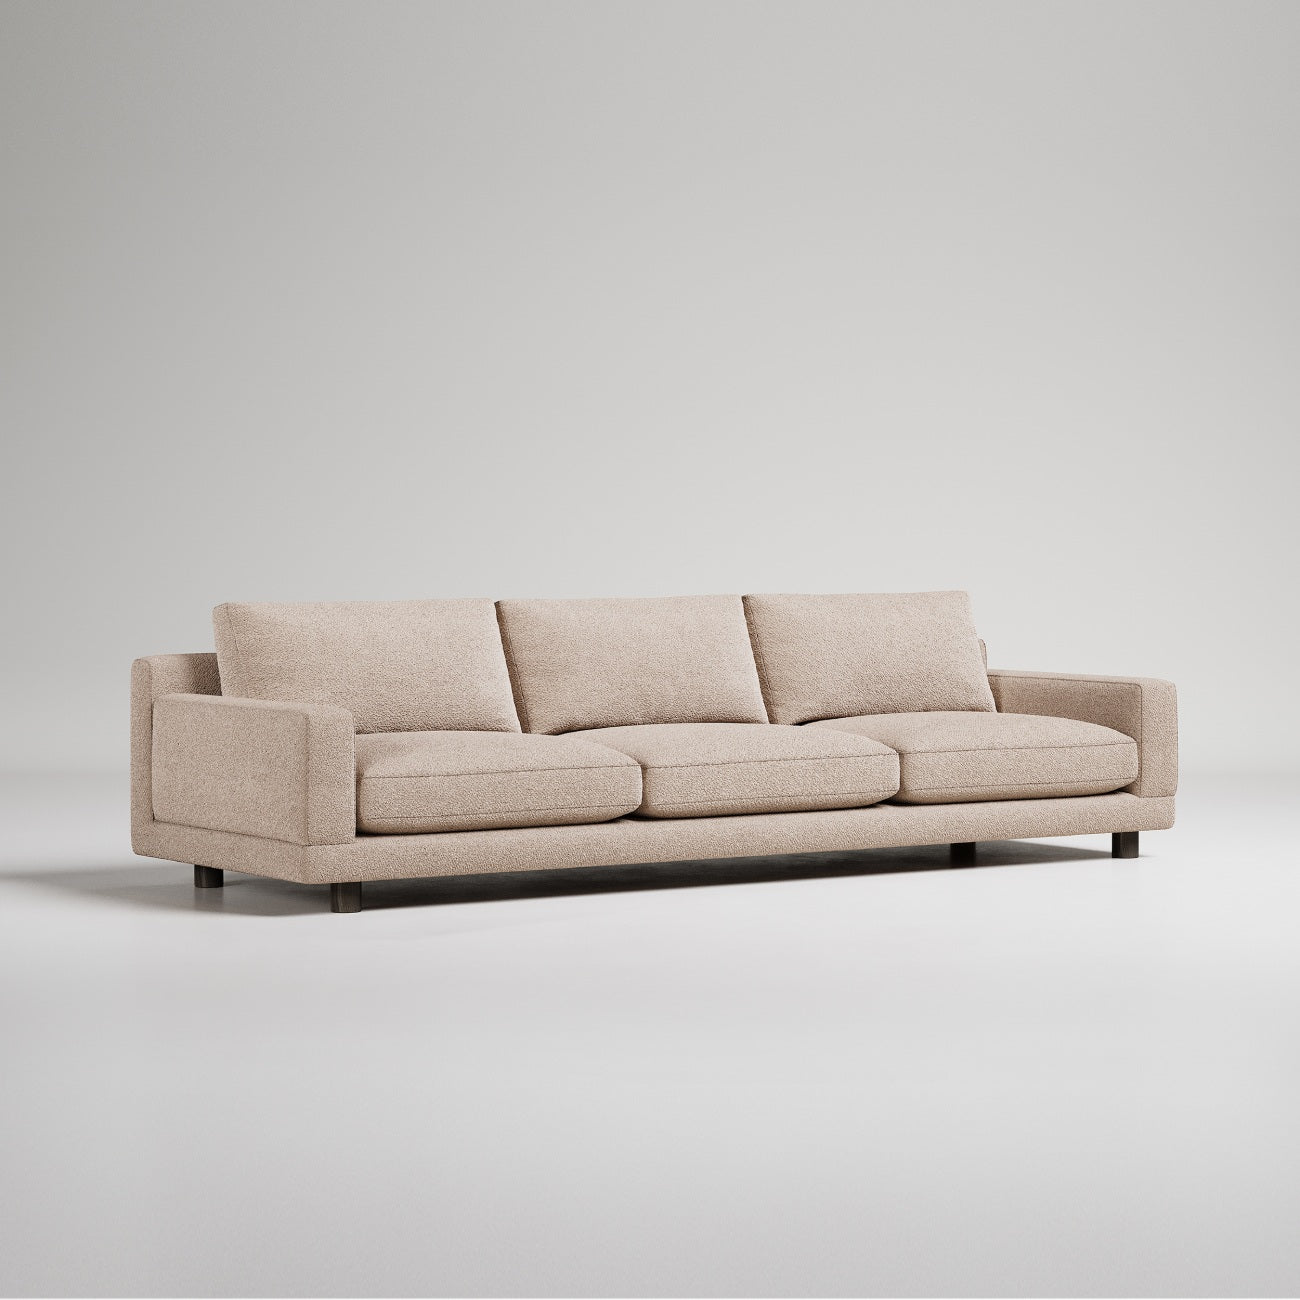 Large three seater sofa in cream fabric